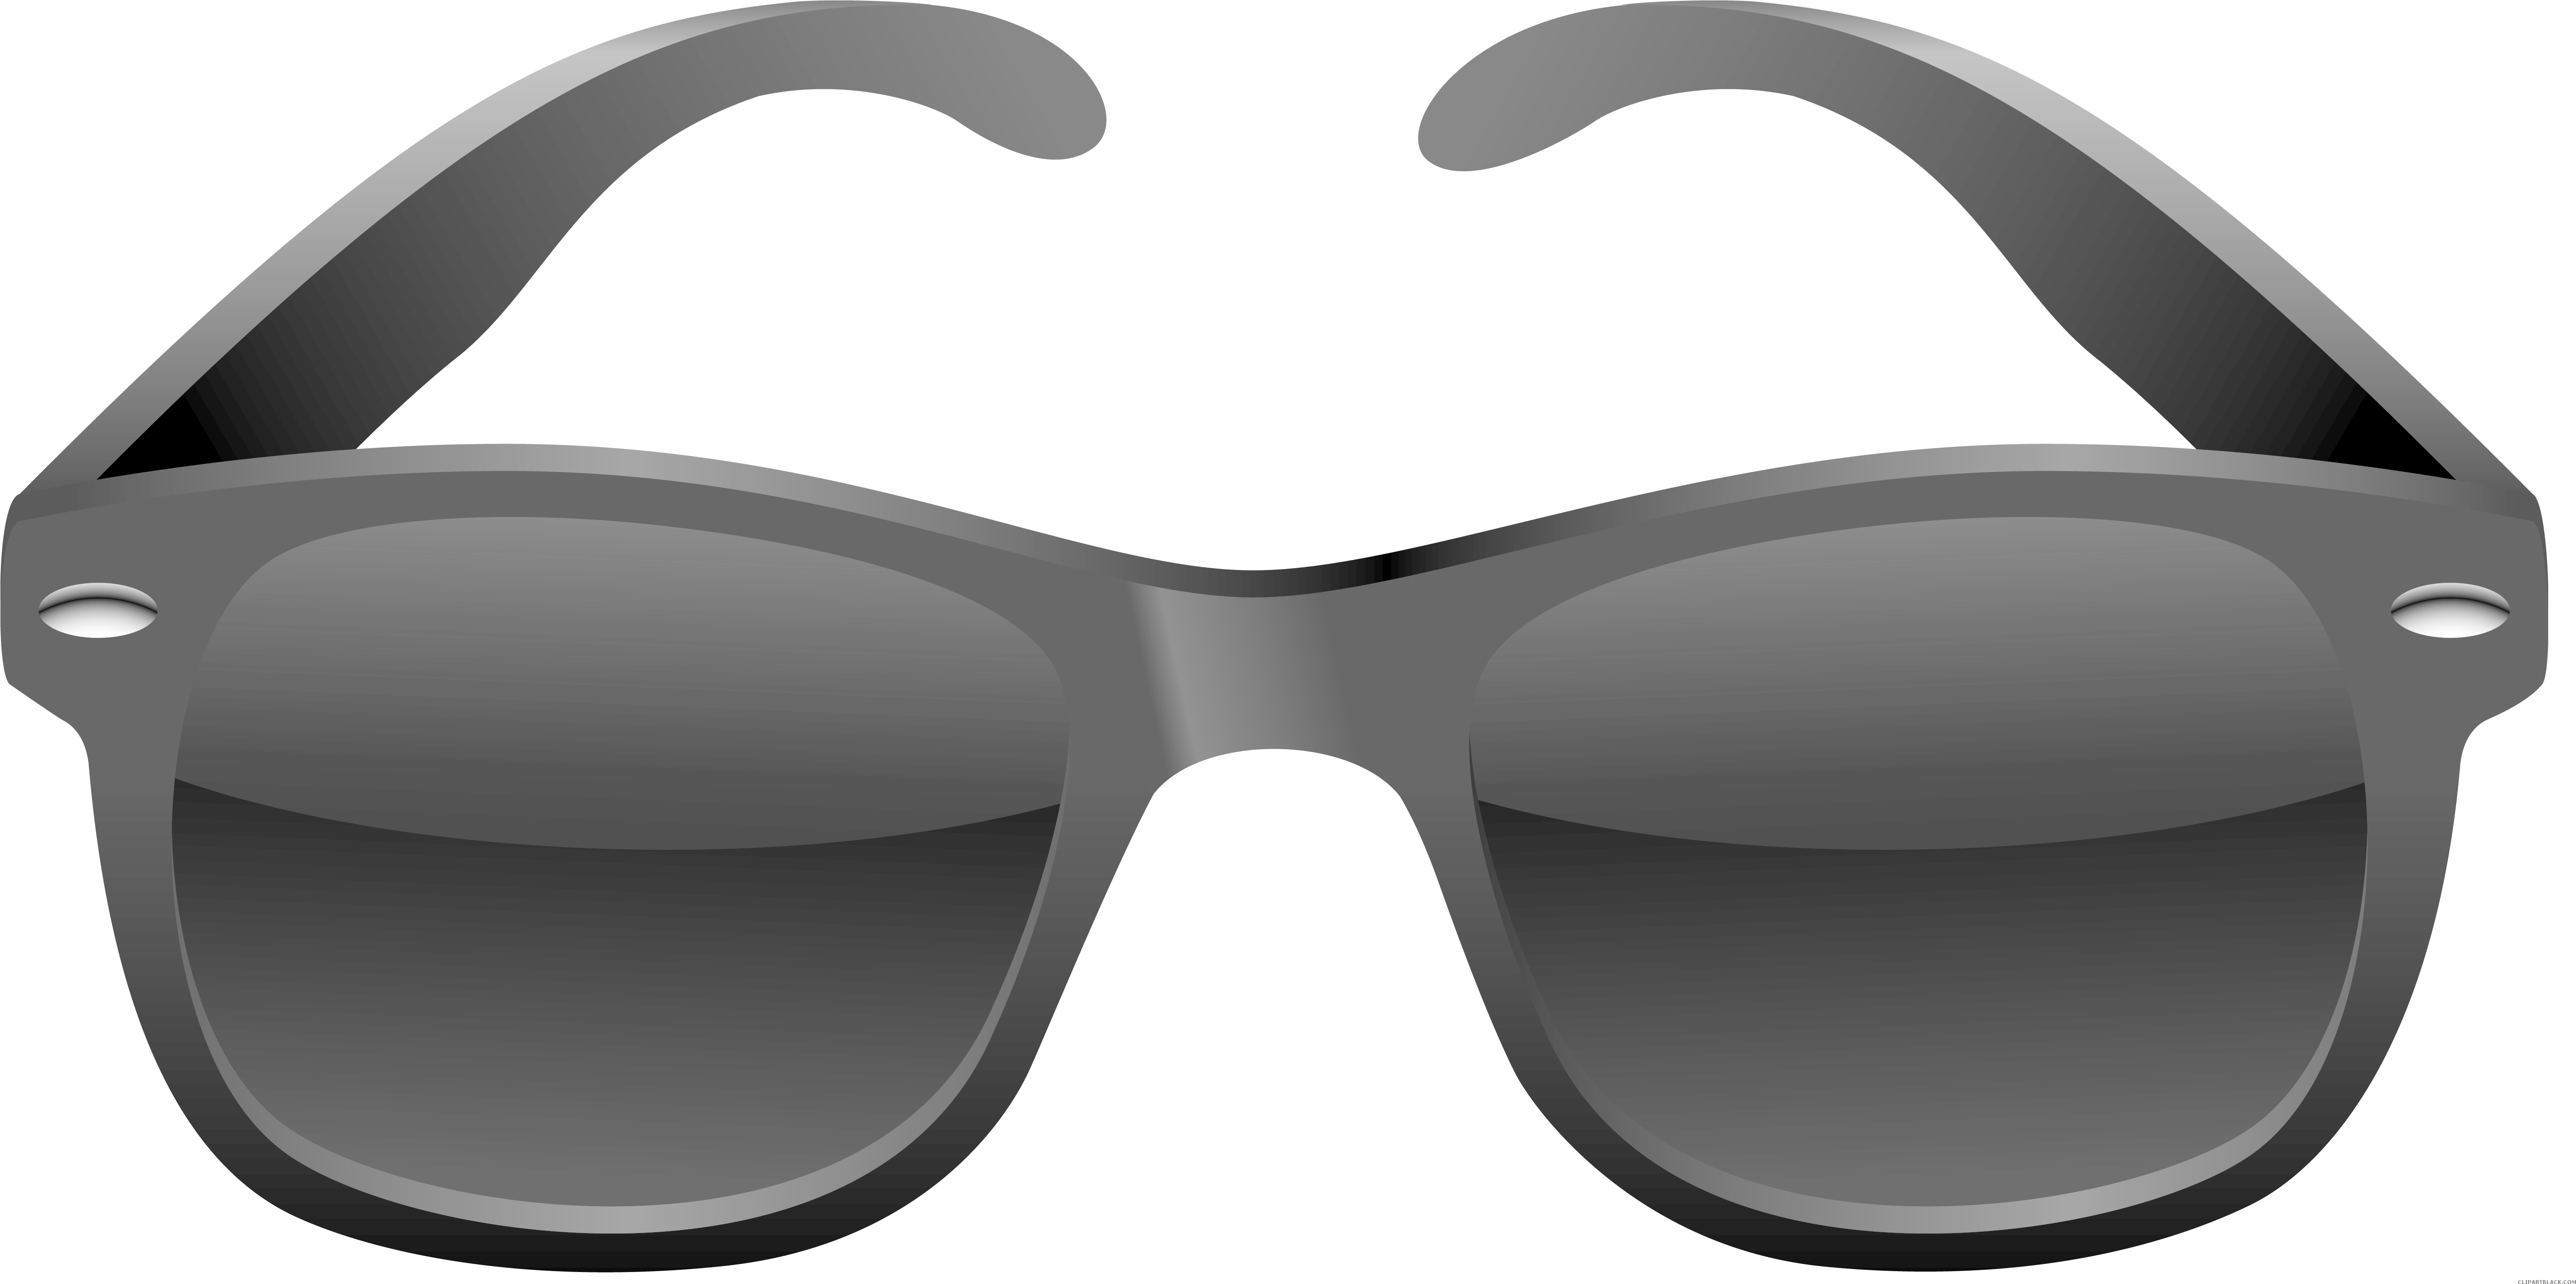 ᐅSunglasses Png, Sunglasses Png Transparent Background